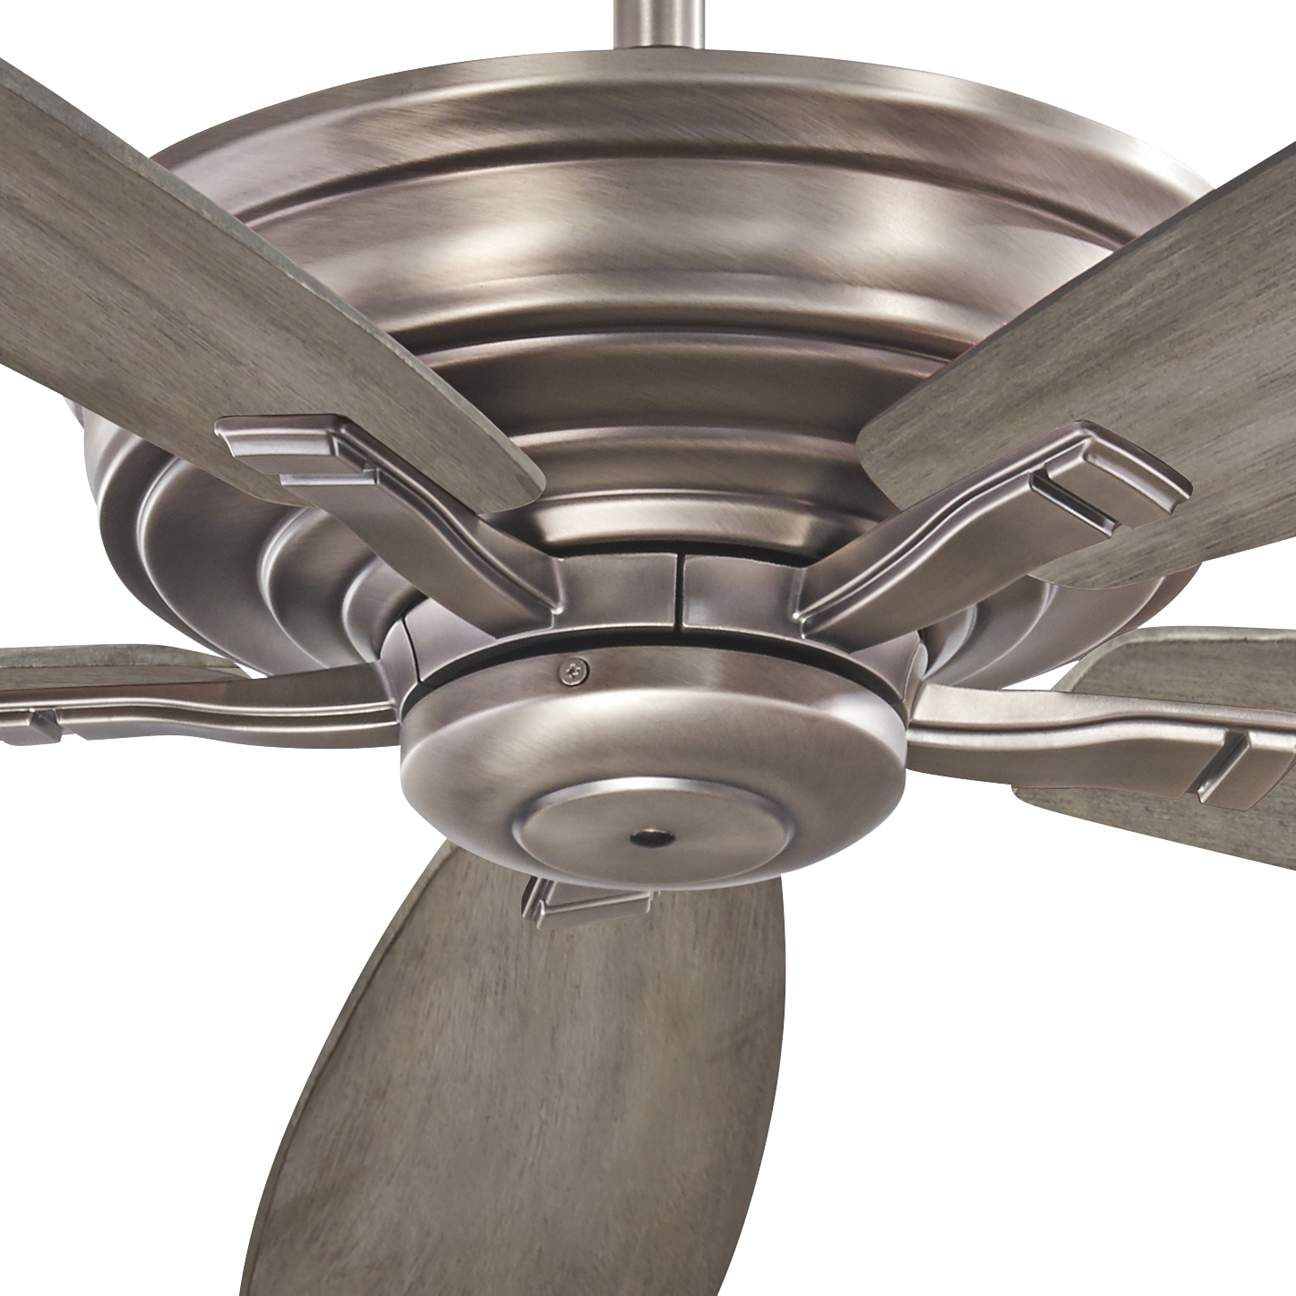 52" Minka Aire Kafe Burnished Nickel Ceiling Fan | Lamps Plus